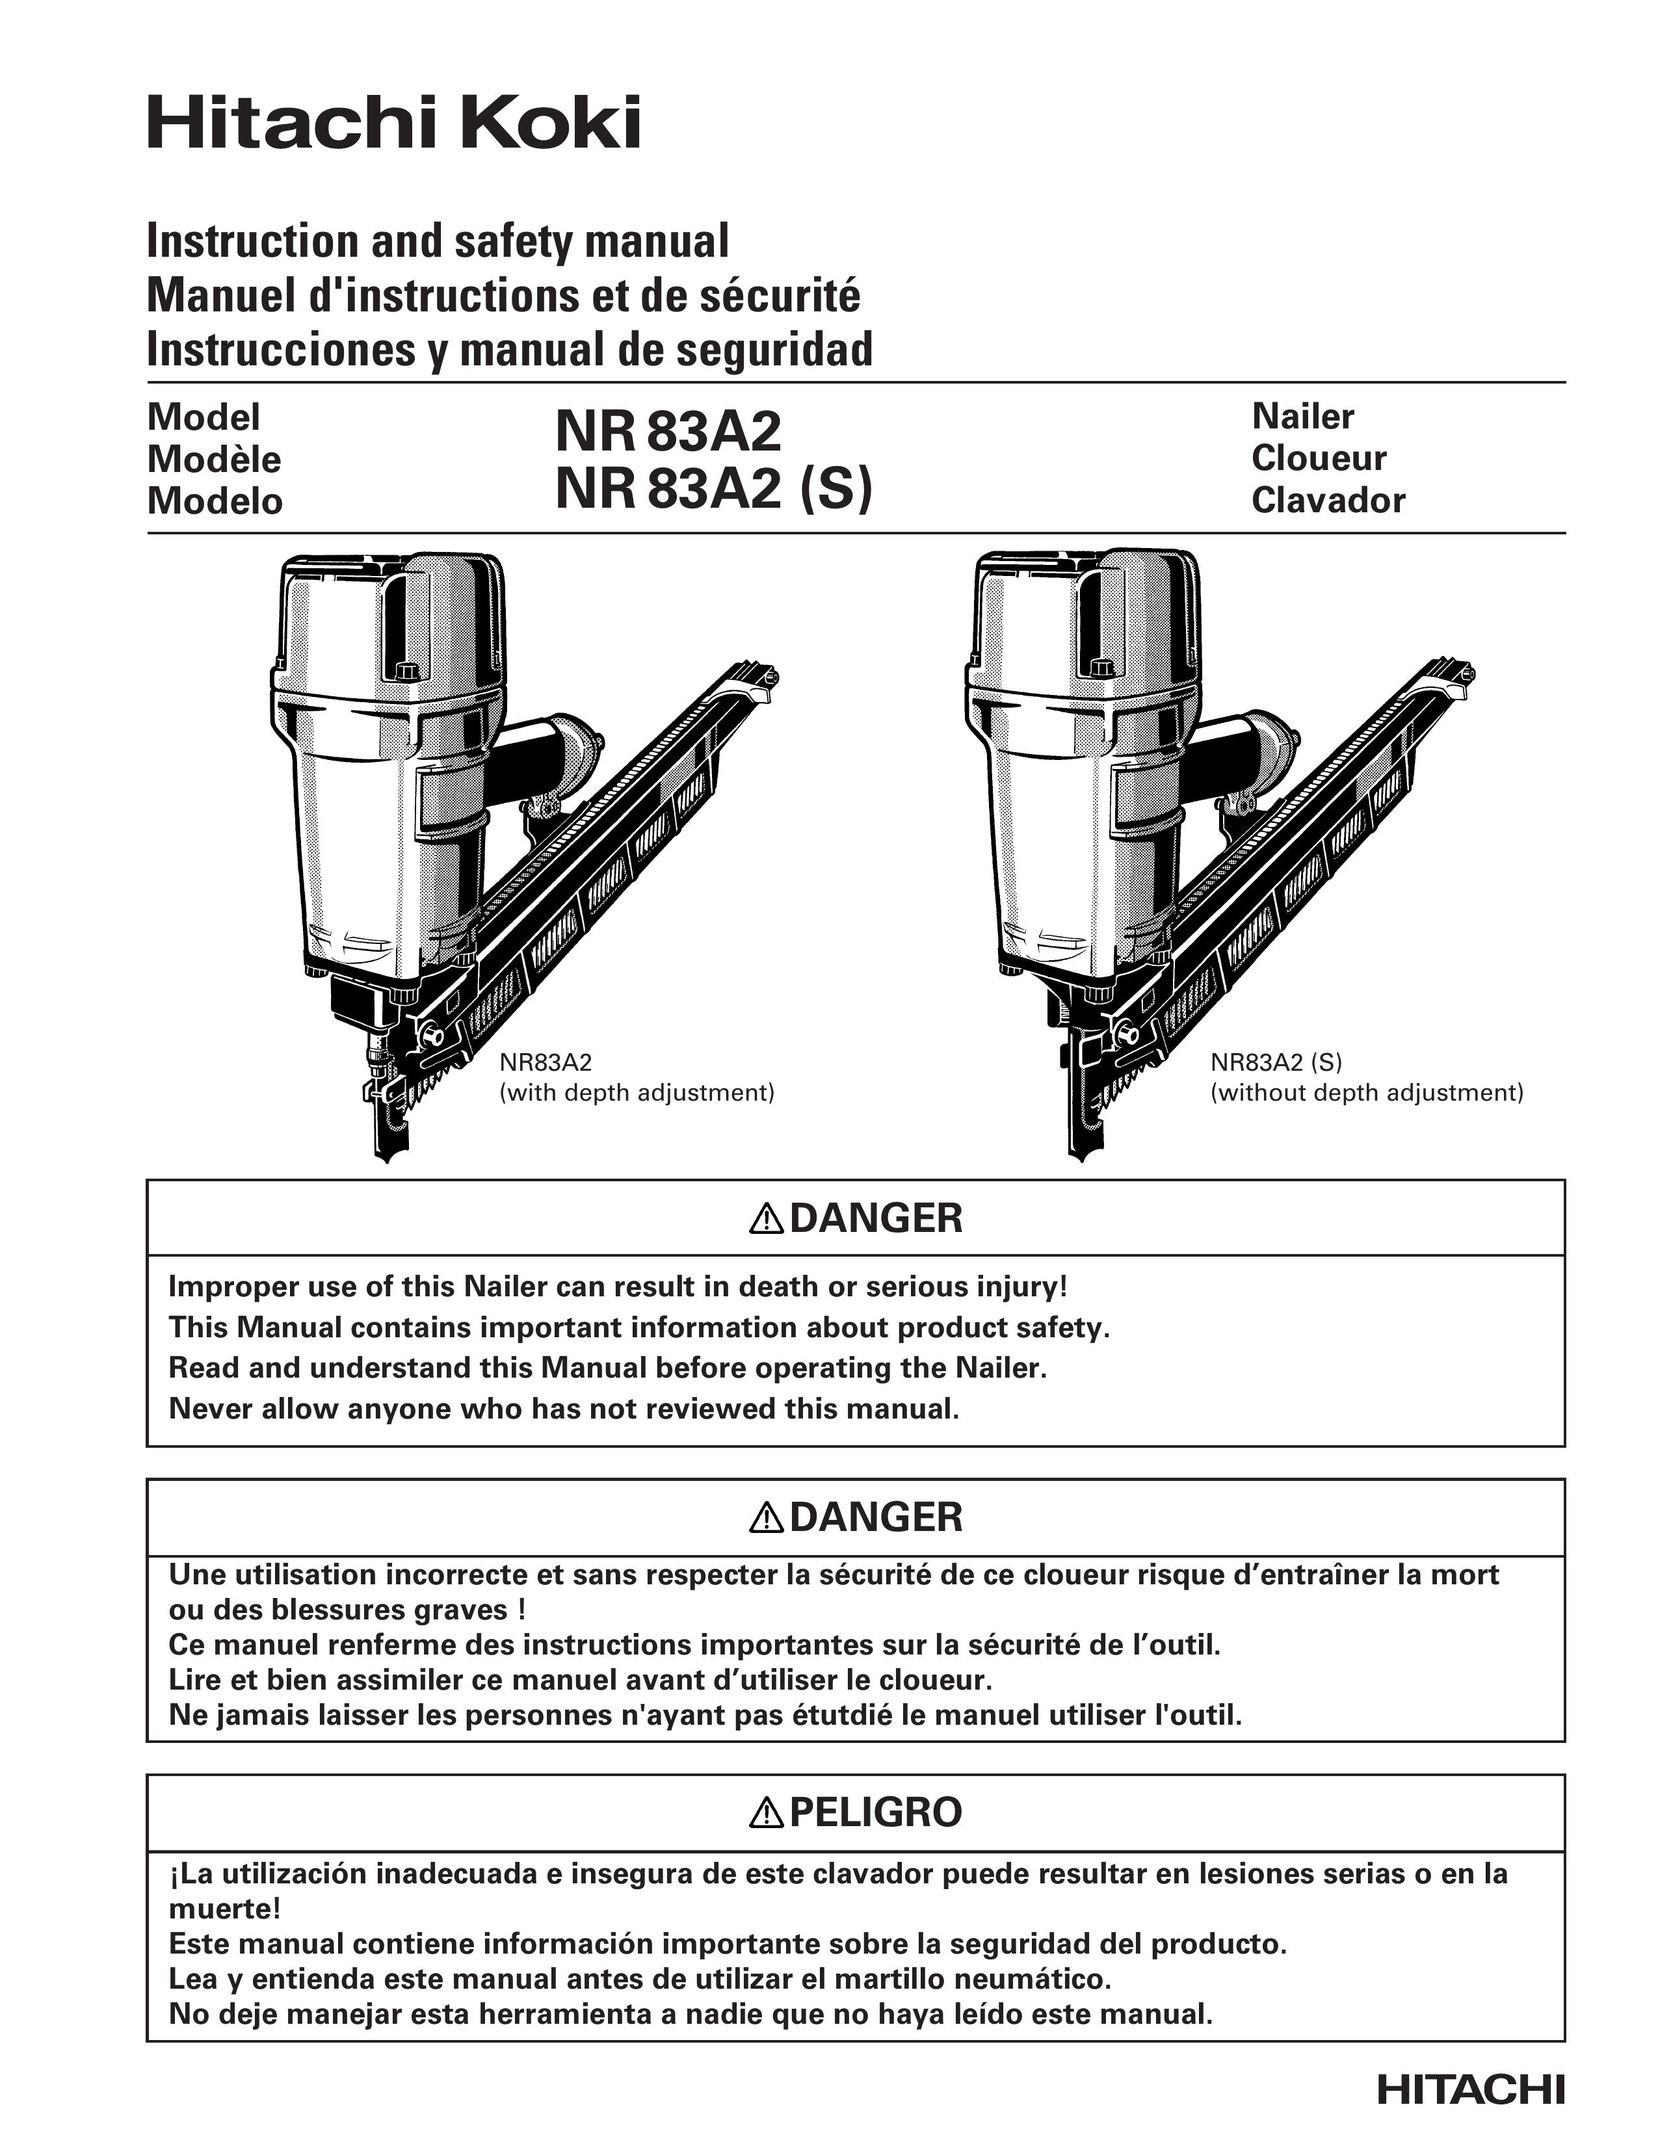 Hitachi Koki USA NR 83A2 (S) Nail Gun User Manual